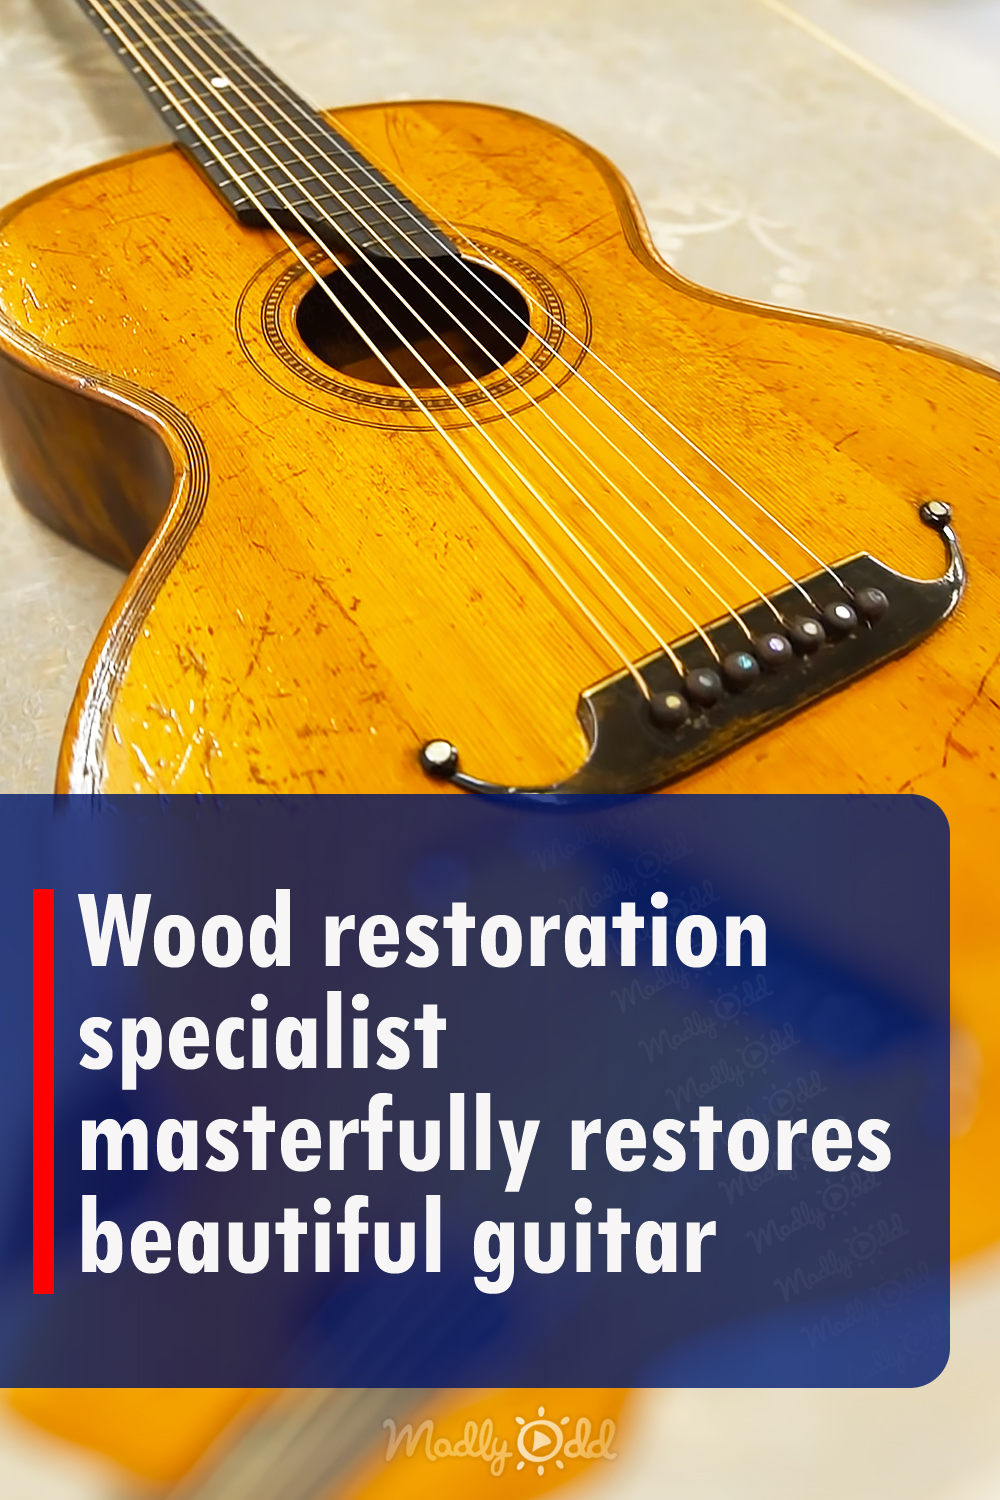 Wood restoration specialist masterfully restores beautiful guitar